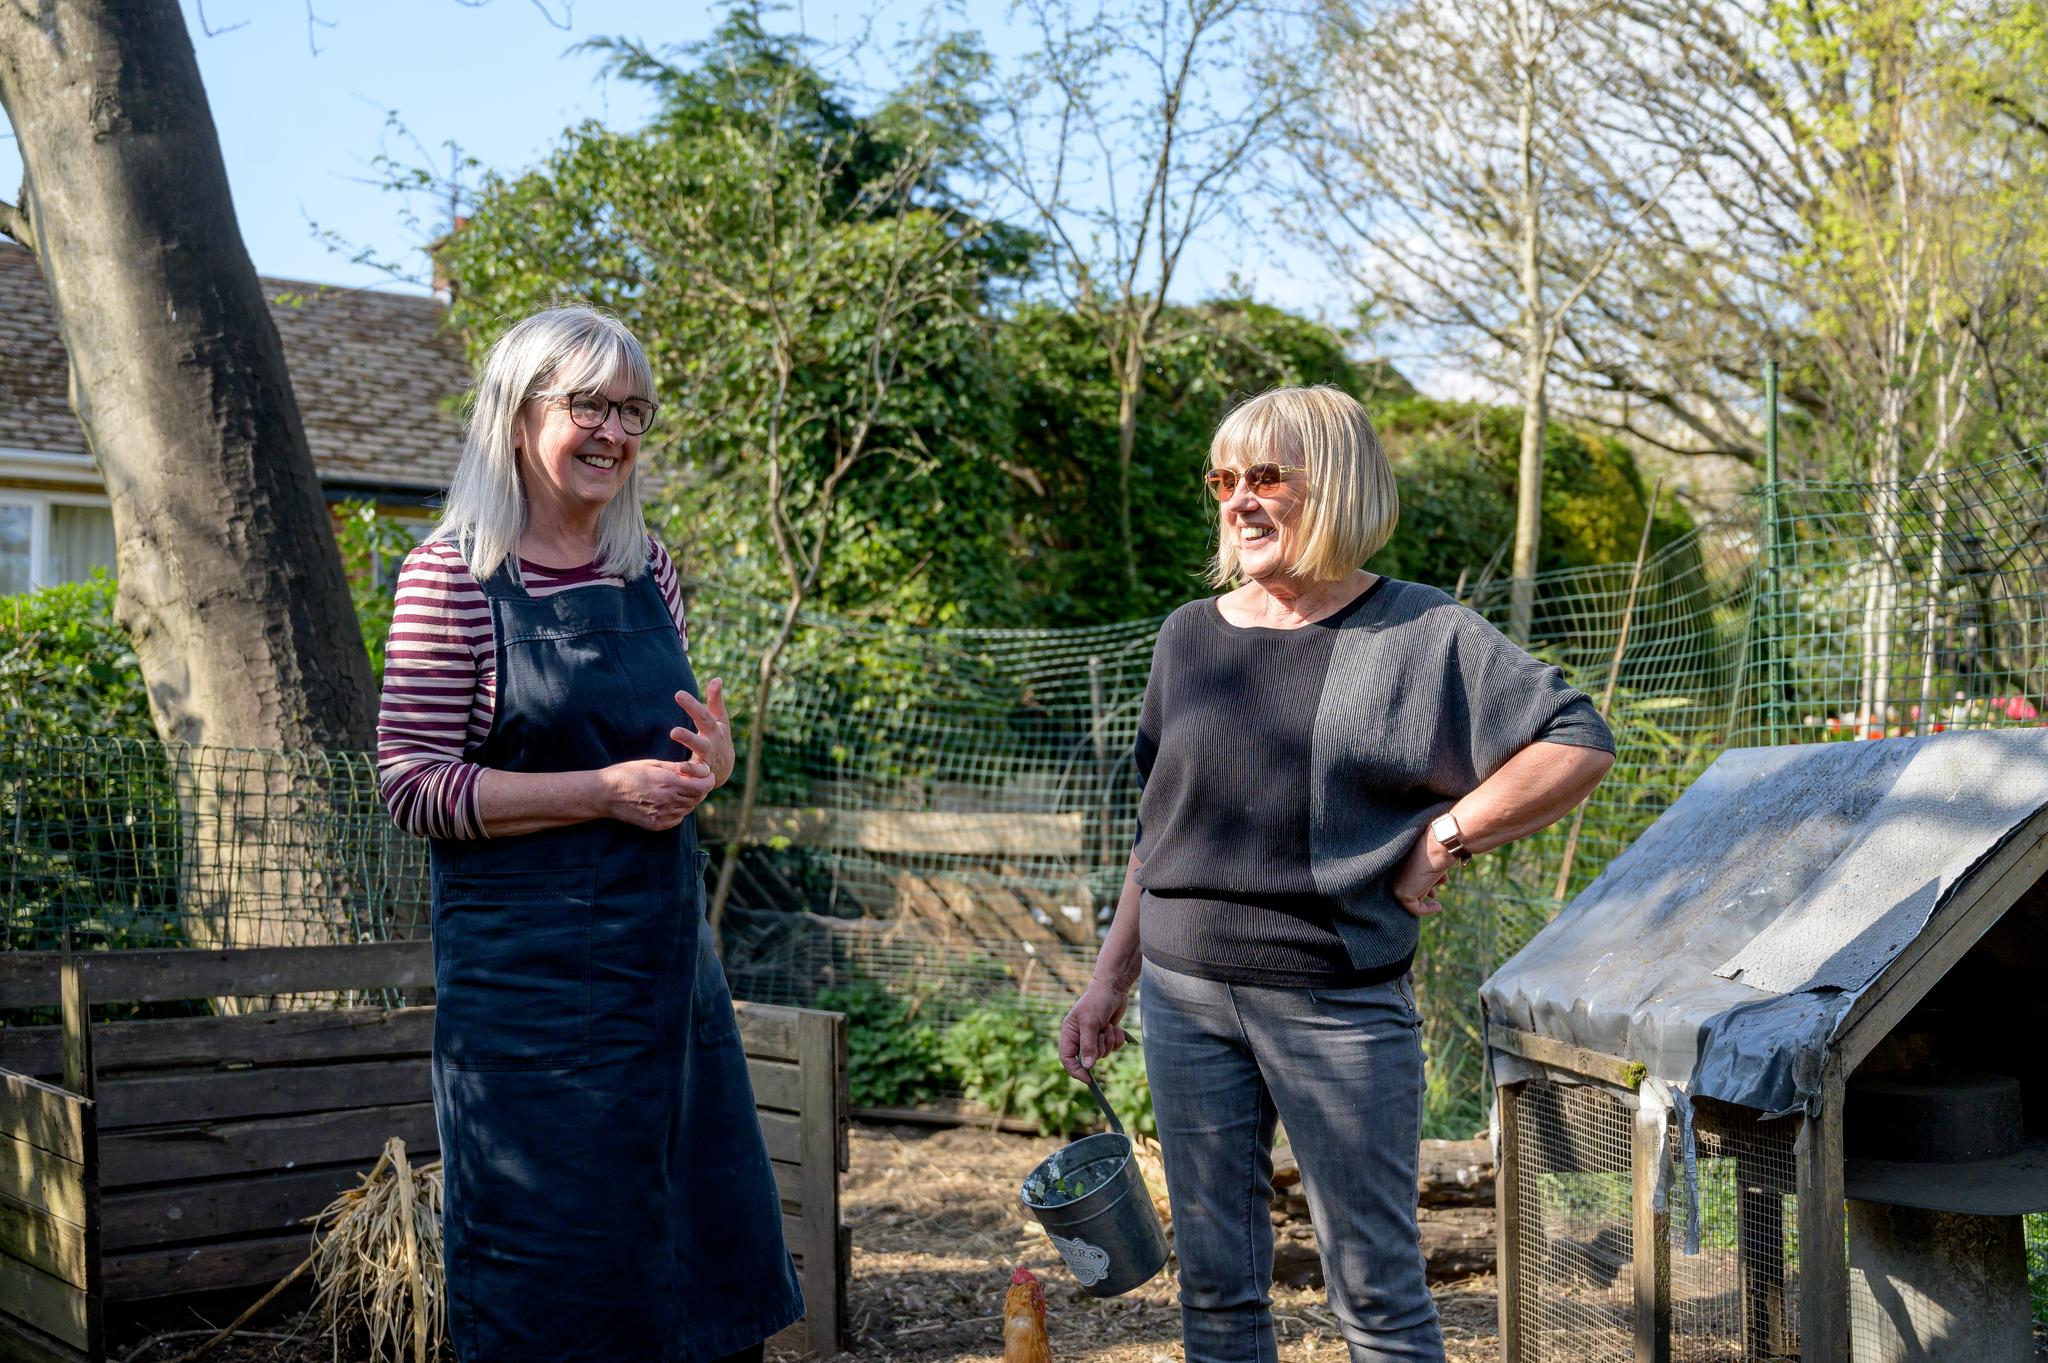 Two women in a garden, laughing.